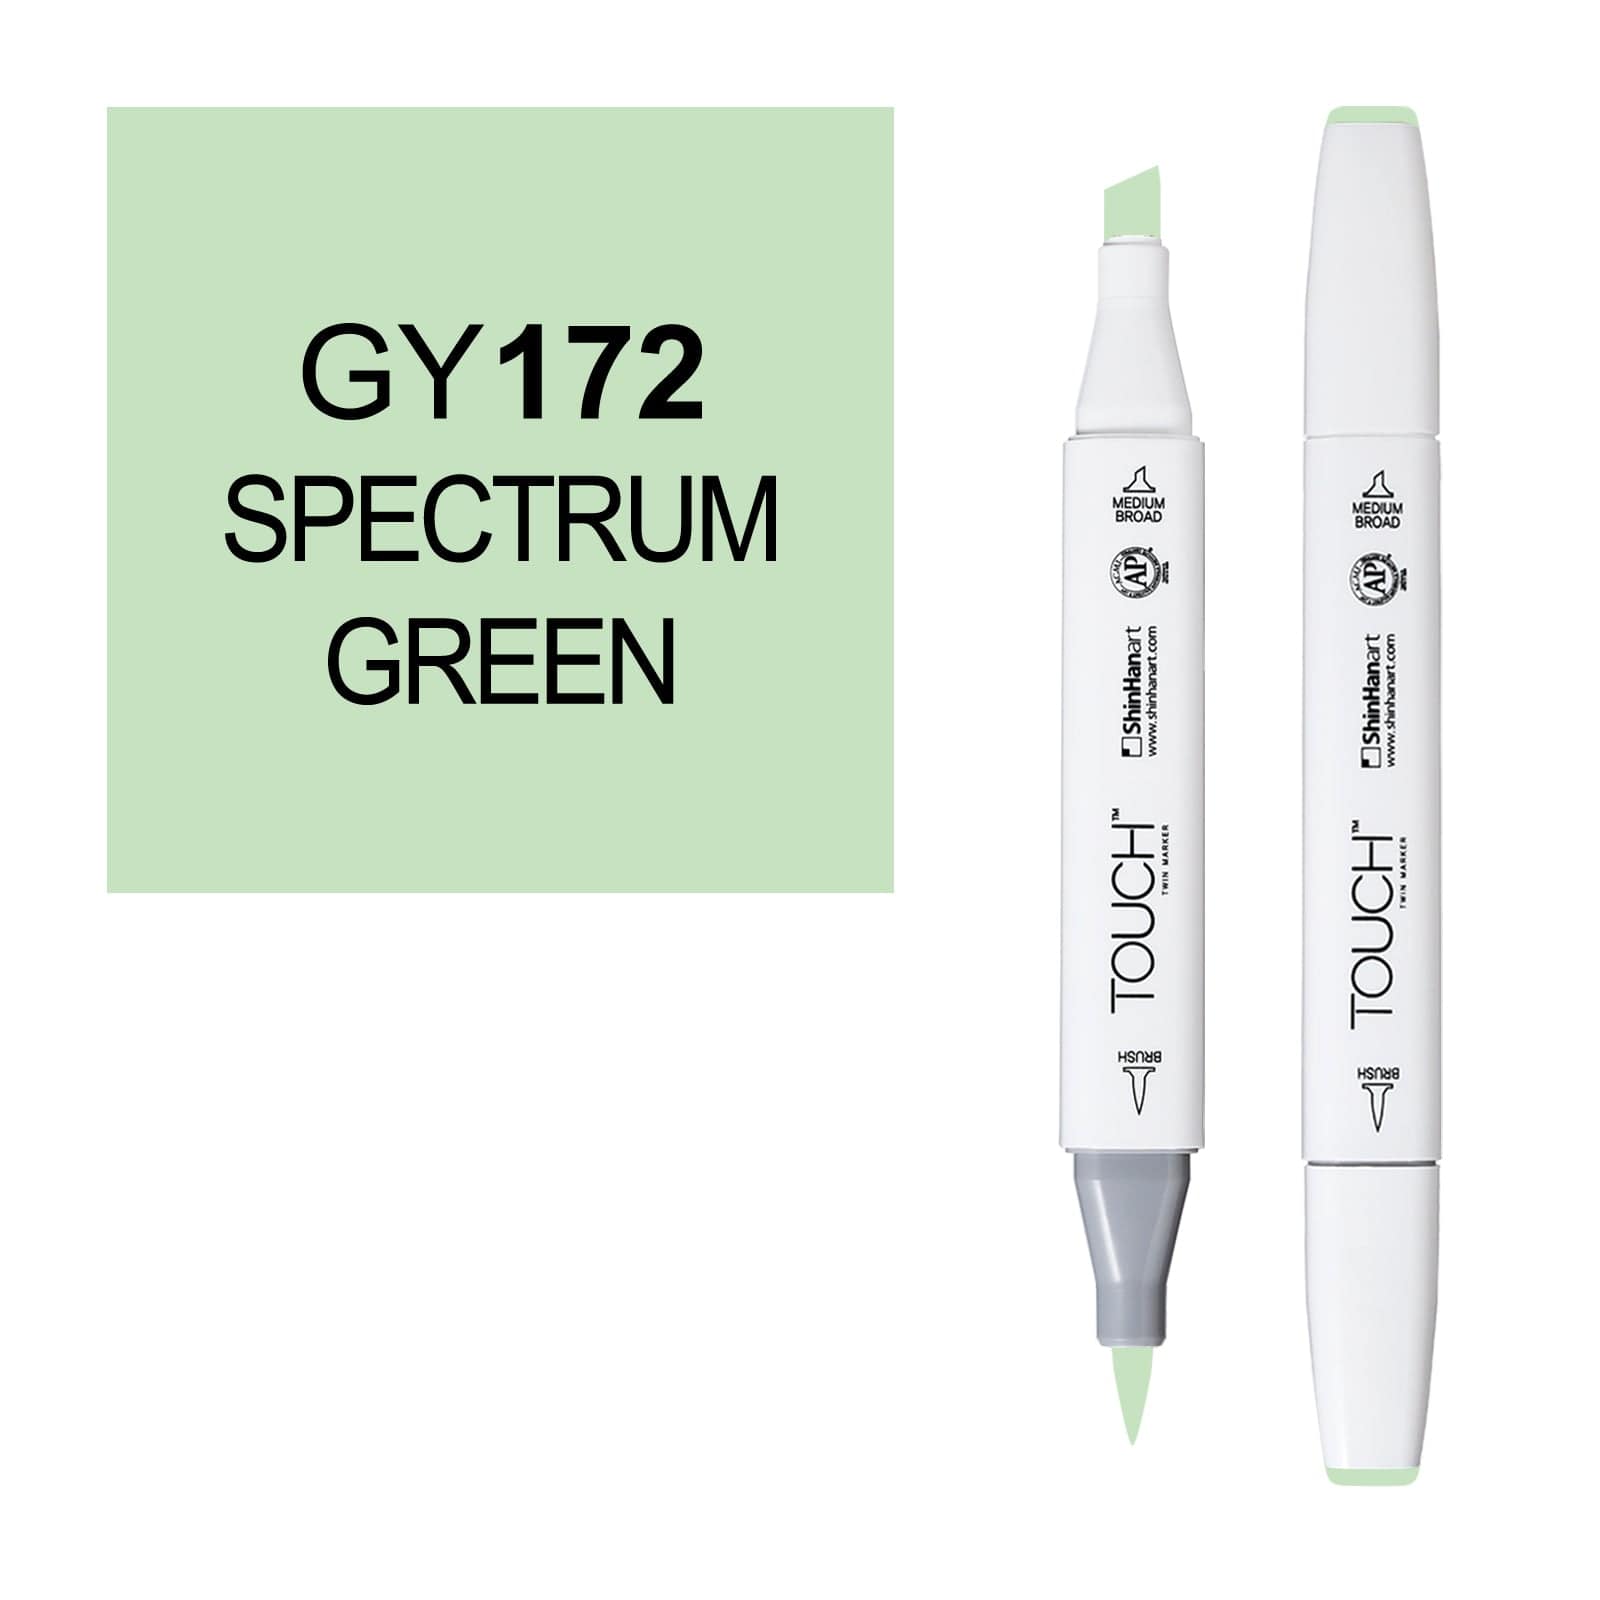 ShinHanart Touch Twin Brush Markers spectrum green